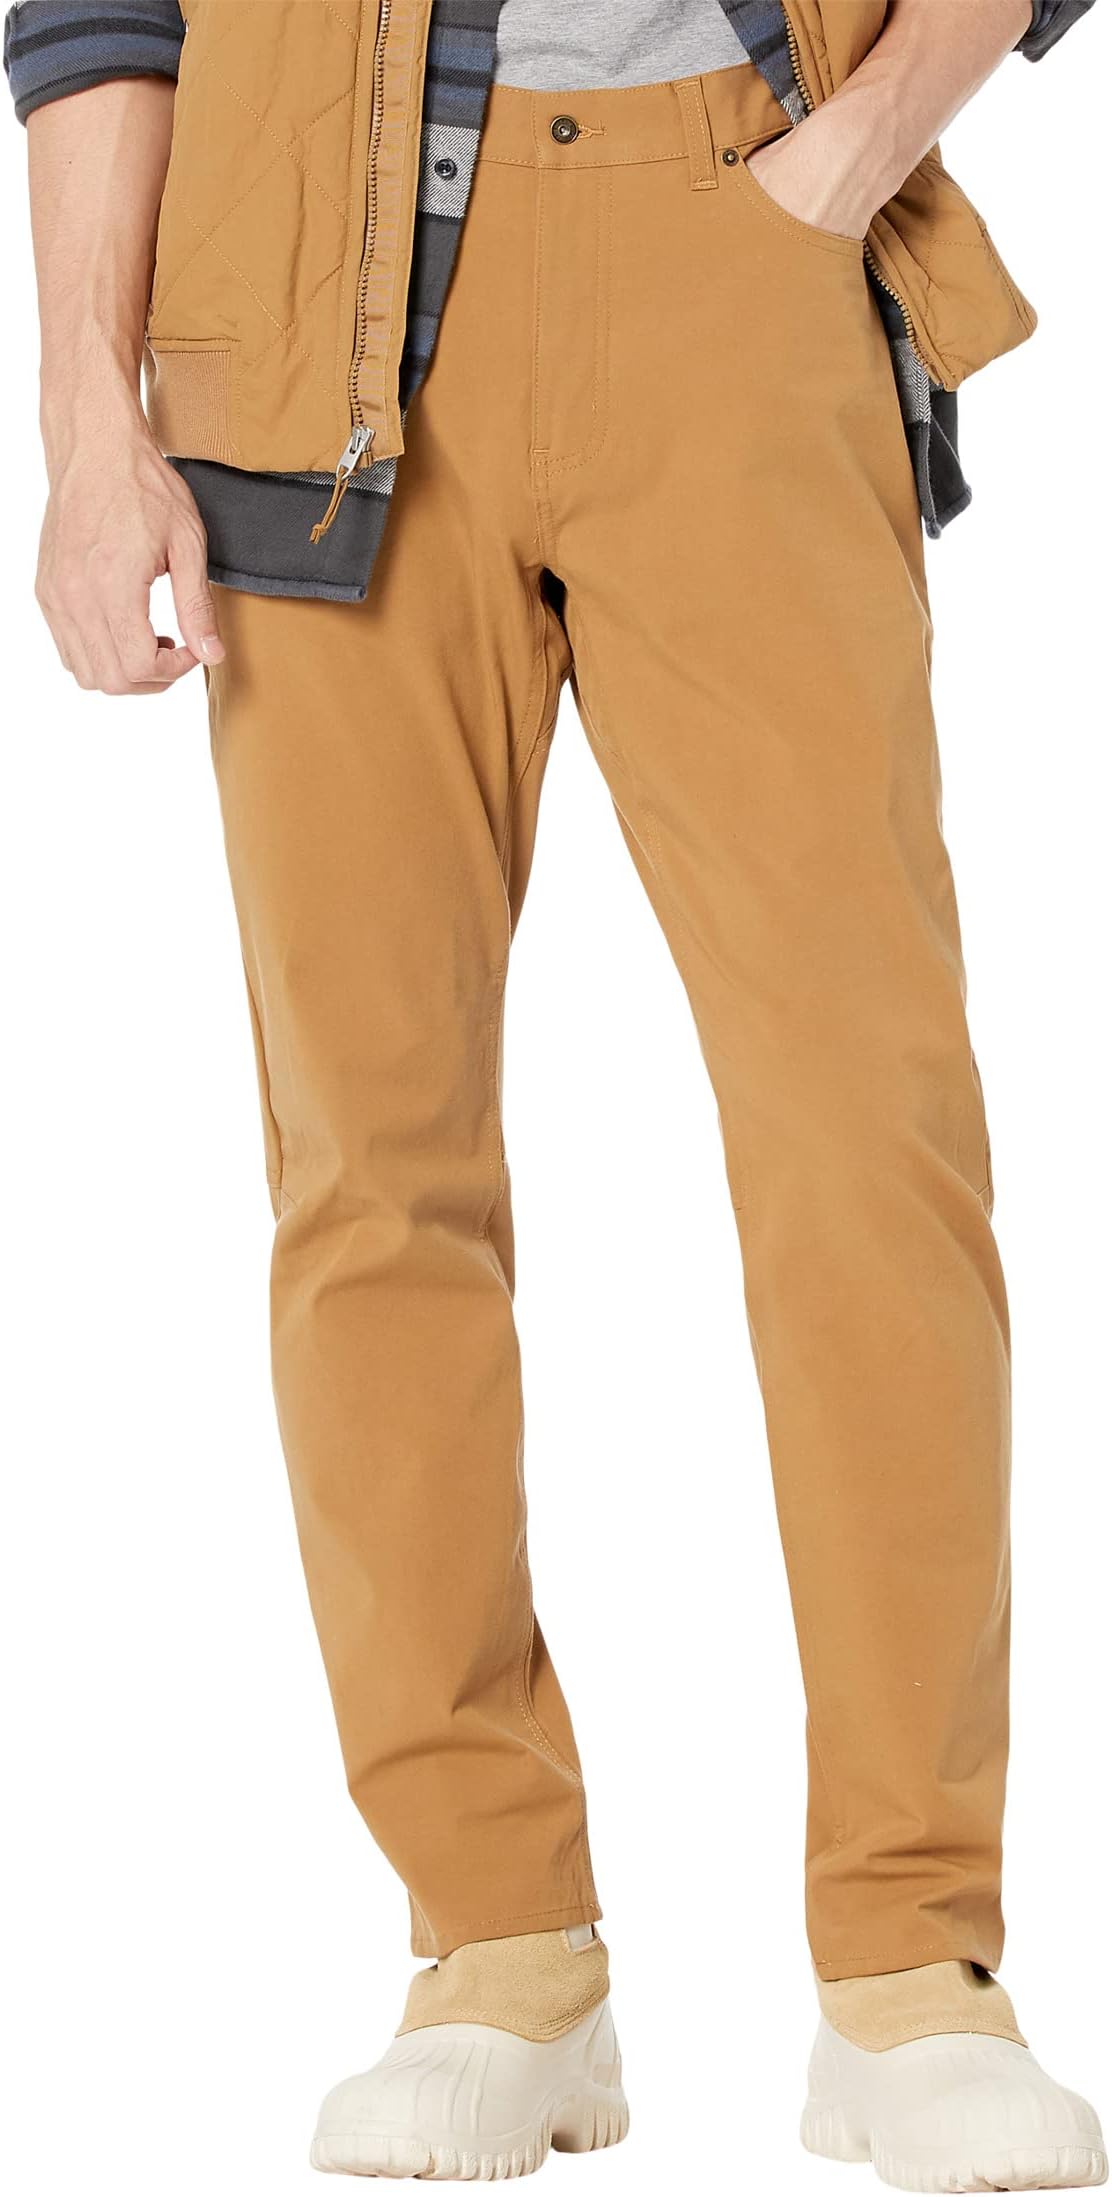 Полевые брюки с пятью карманами The North Face, цвет Utility Brown шорты из рипстопа 7 дюймов класс v the north face цвет utility brown